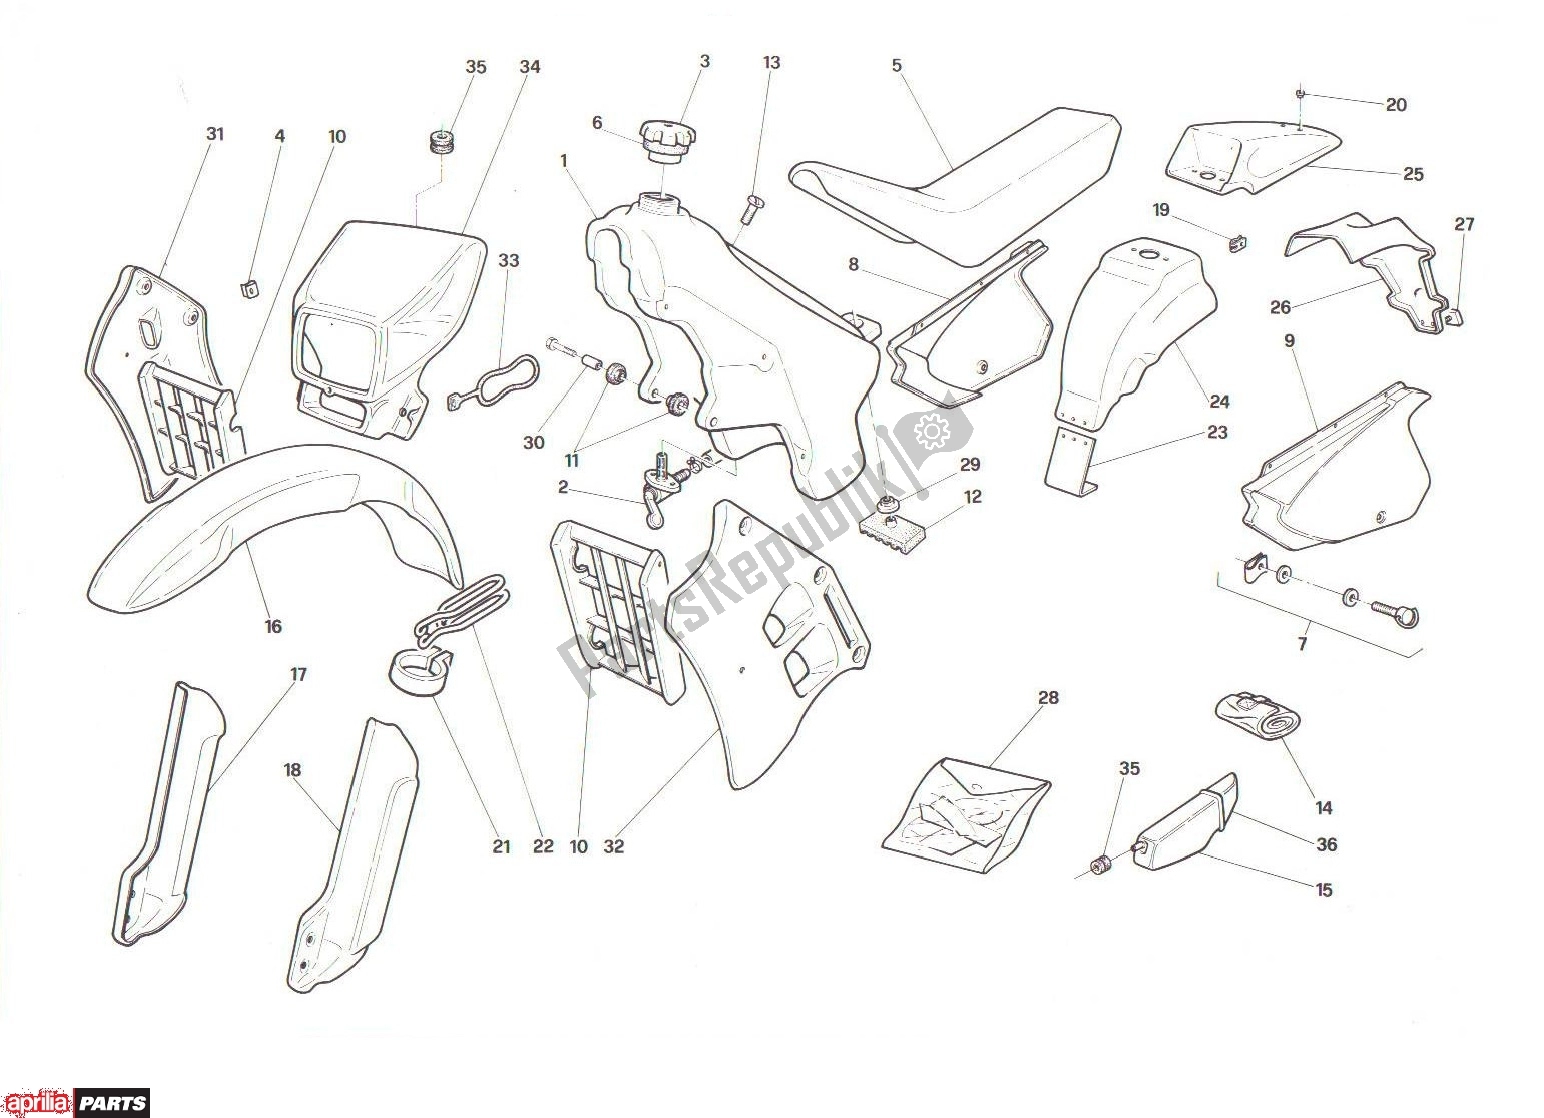 All parts for the Body of the Aprilia RX 104 125 1991